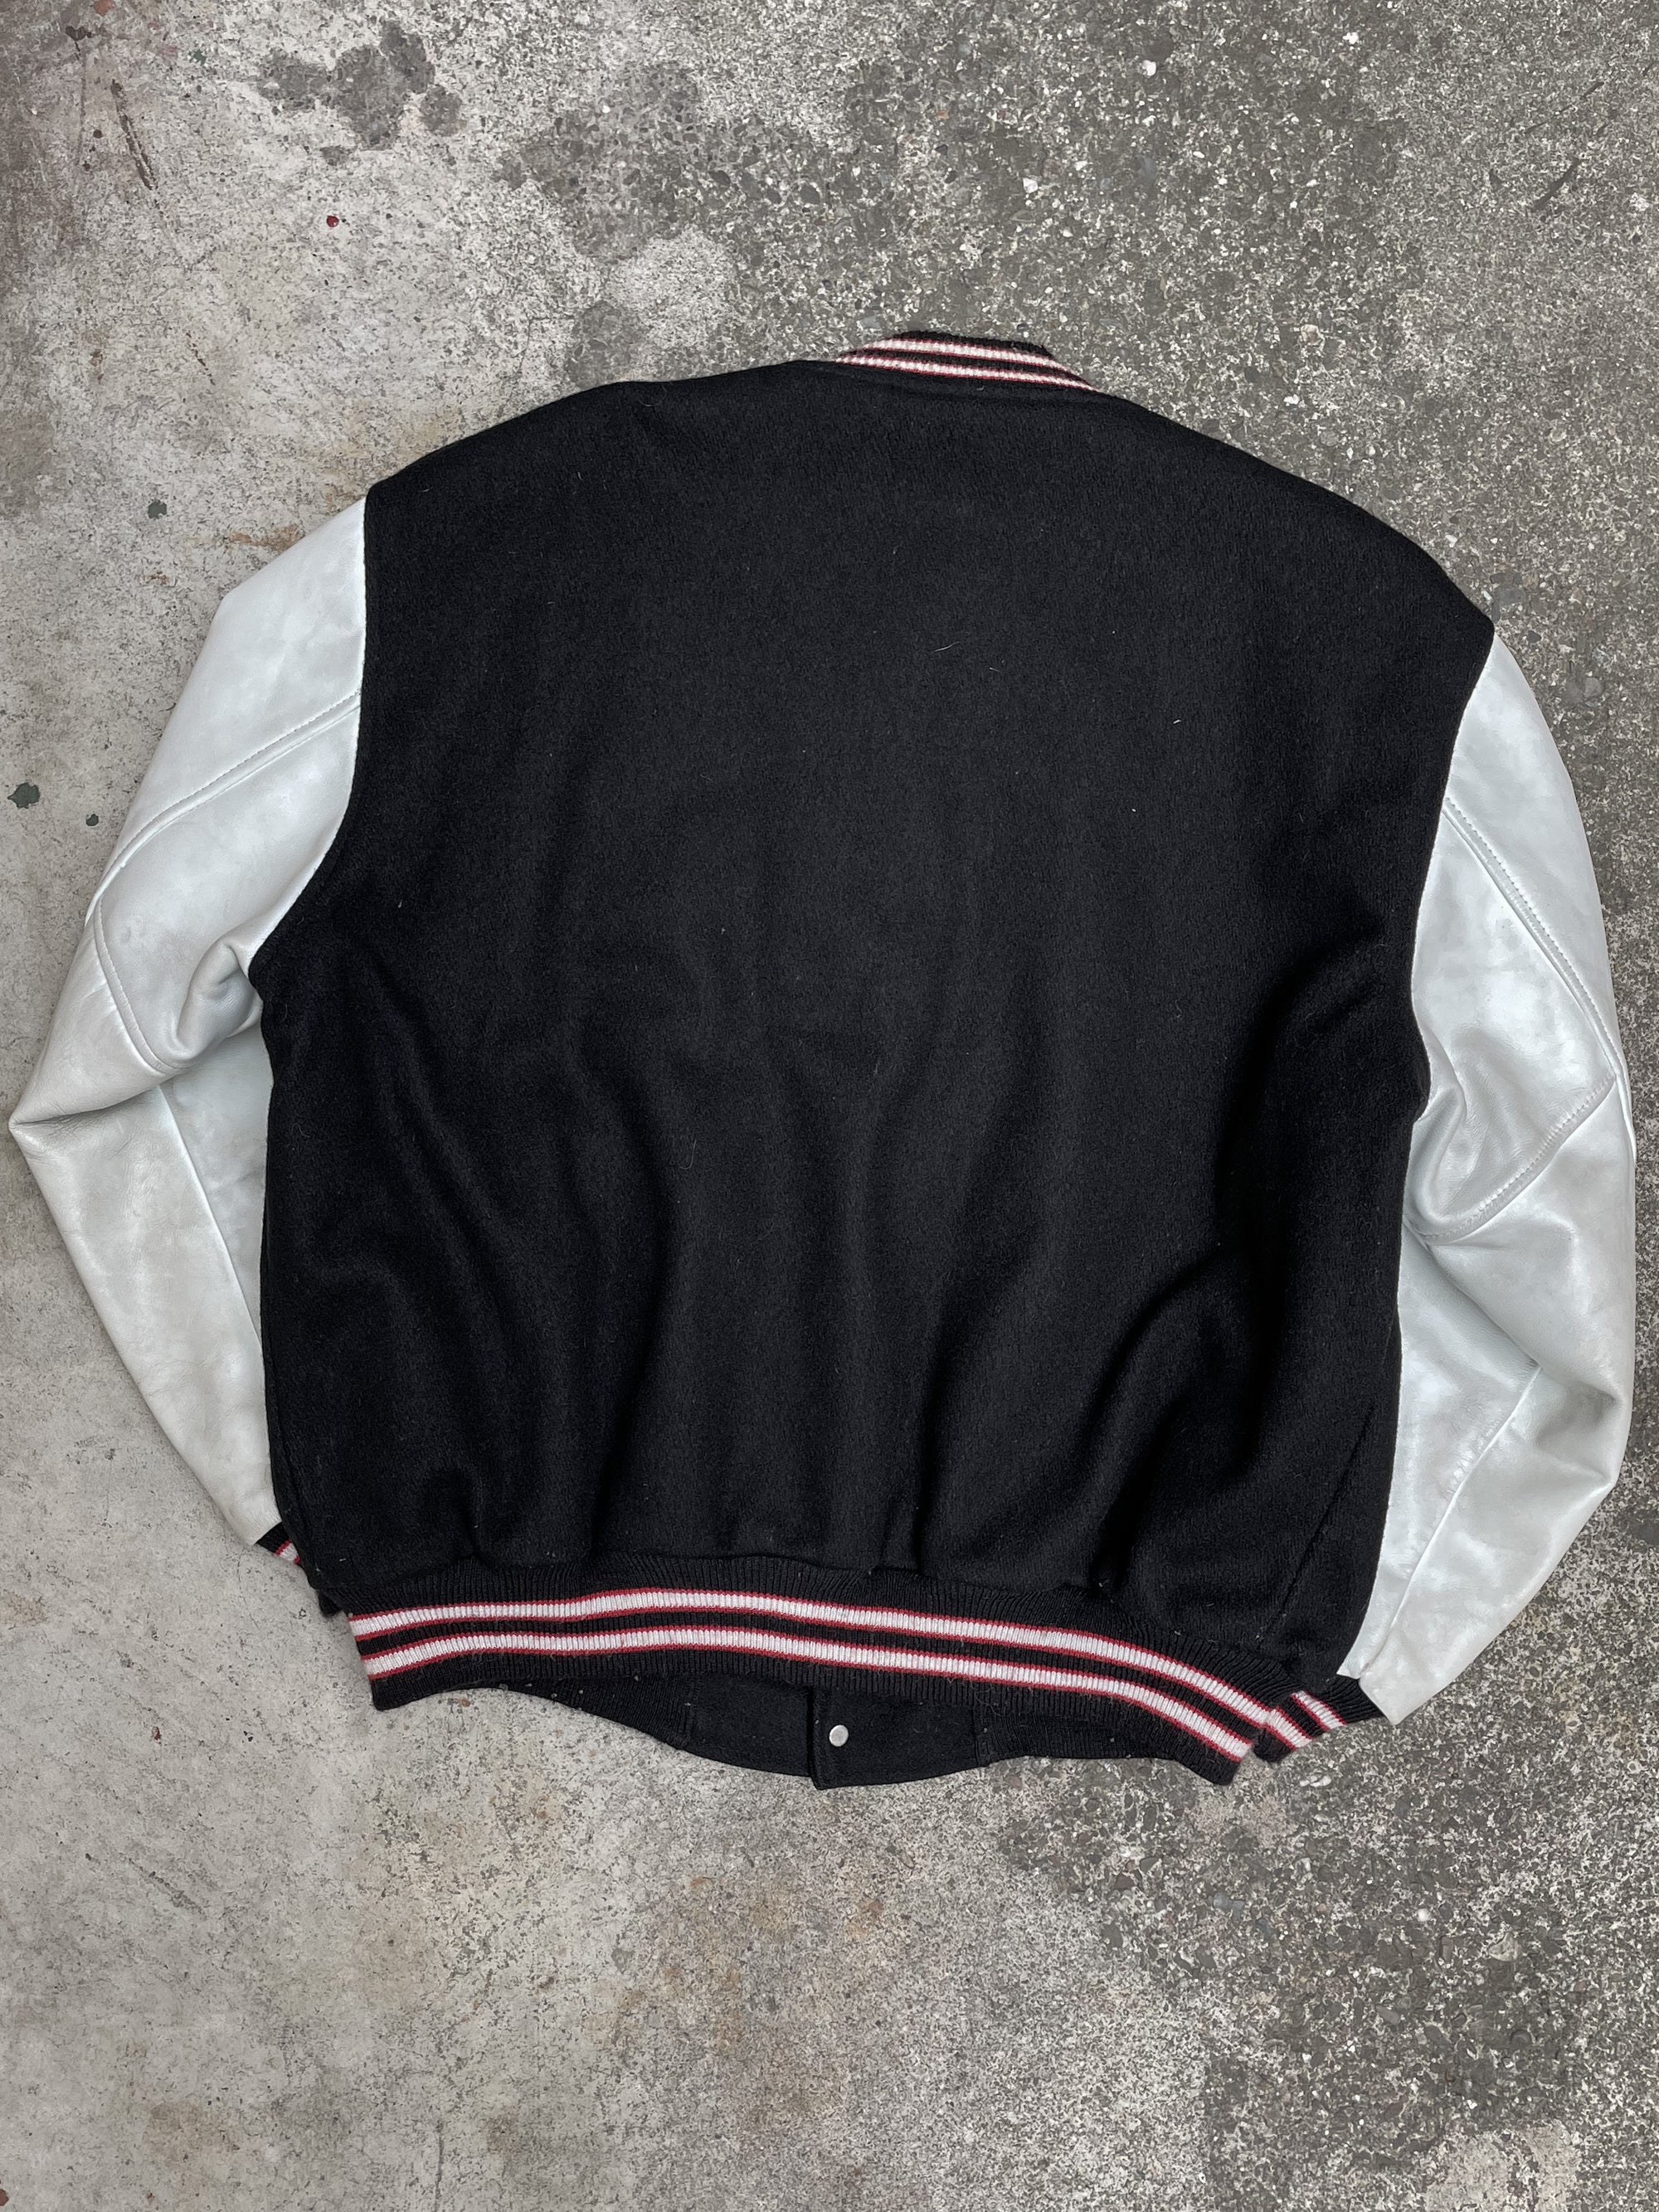 1990s “Chris” Chain Stitched Black Varsity Jacket (XL)